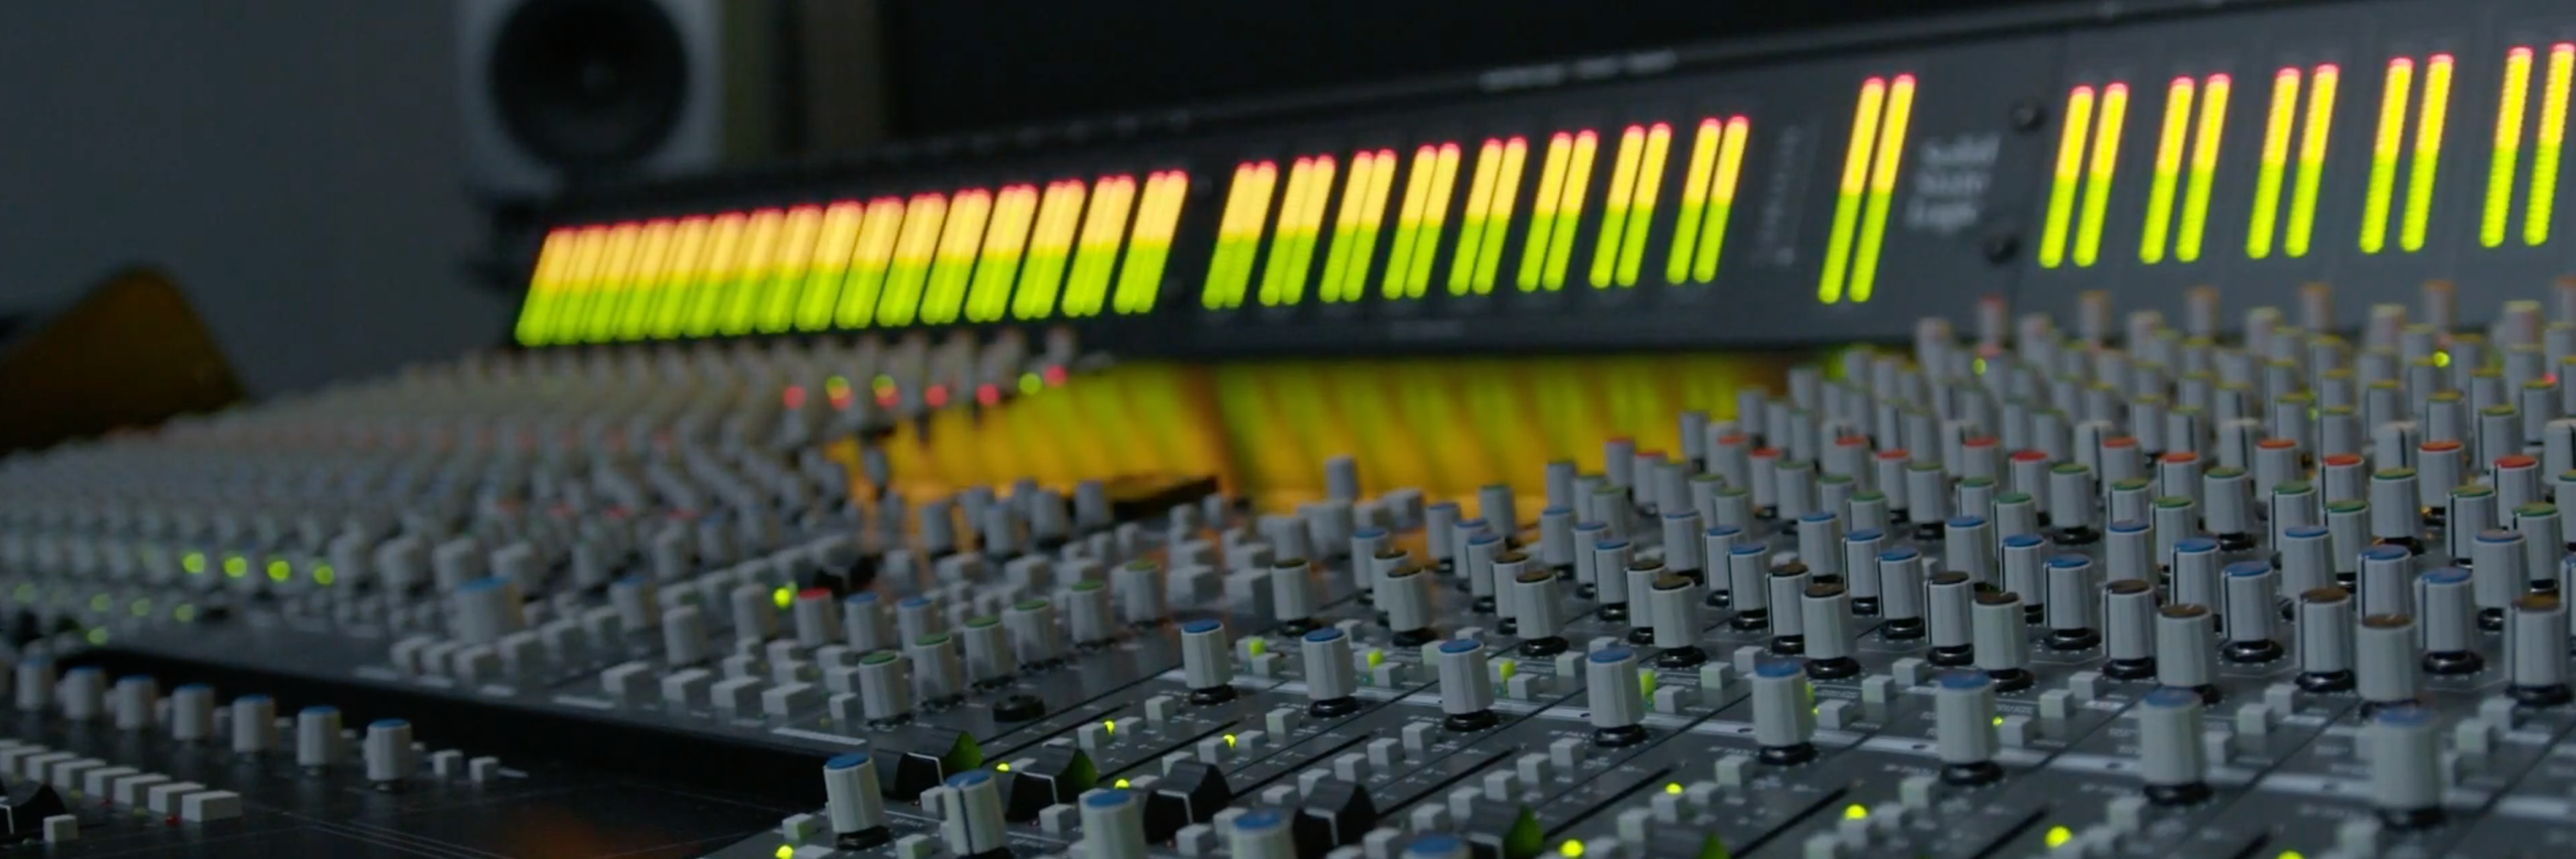 Audio + Music Production Board